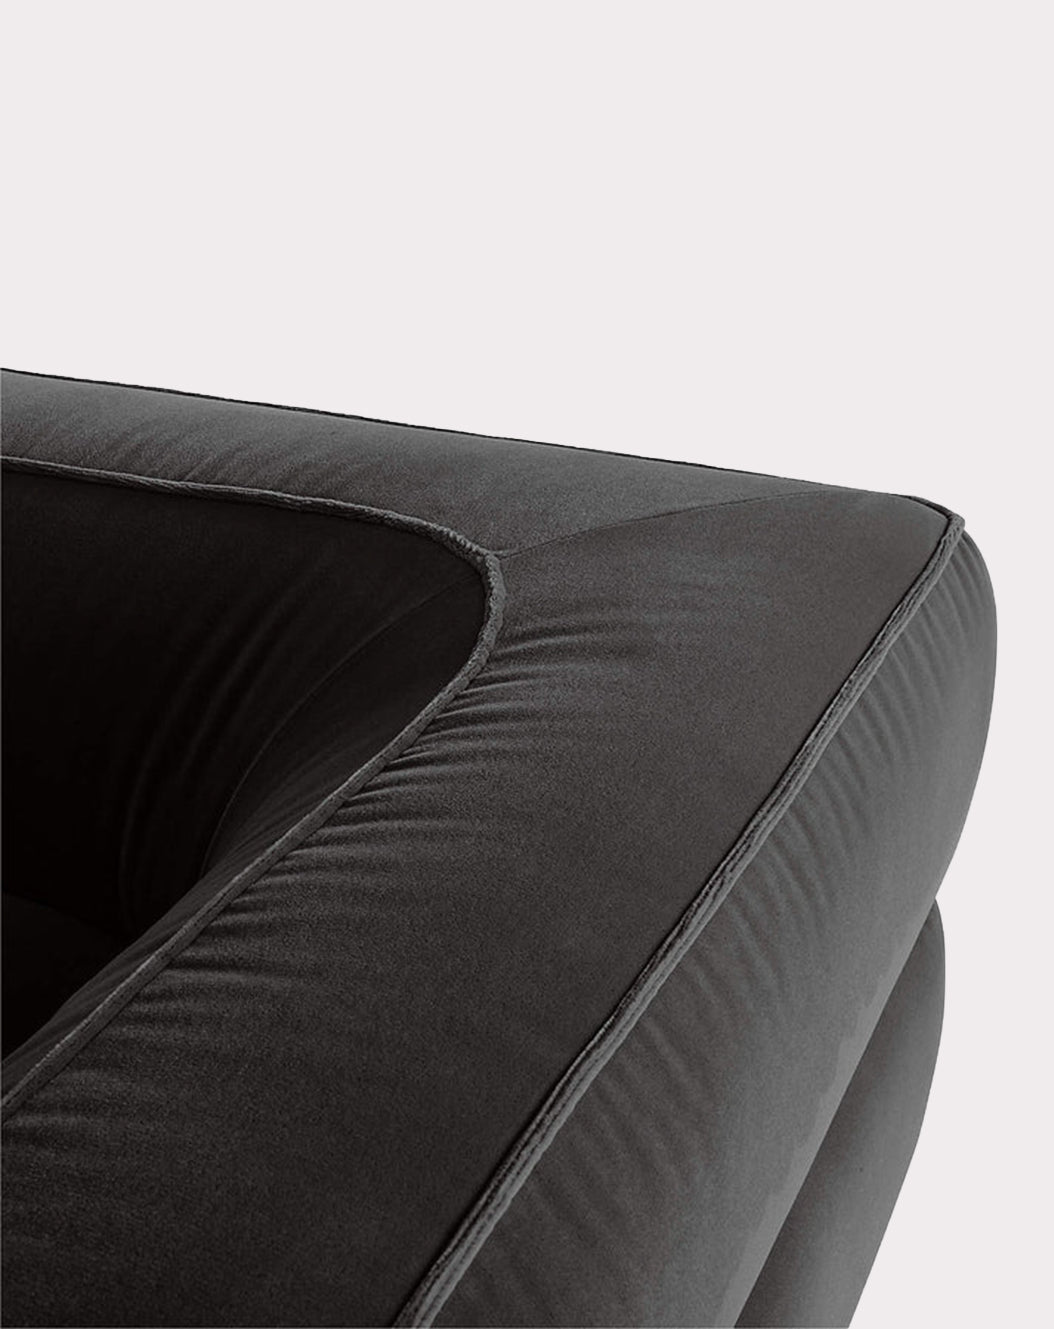 Angolare 5-Piece Sectional Sofa